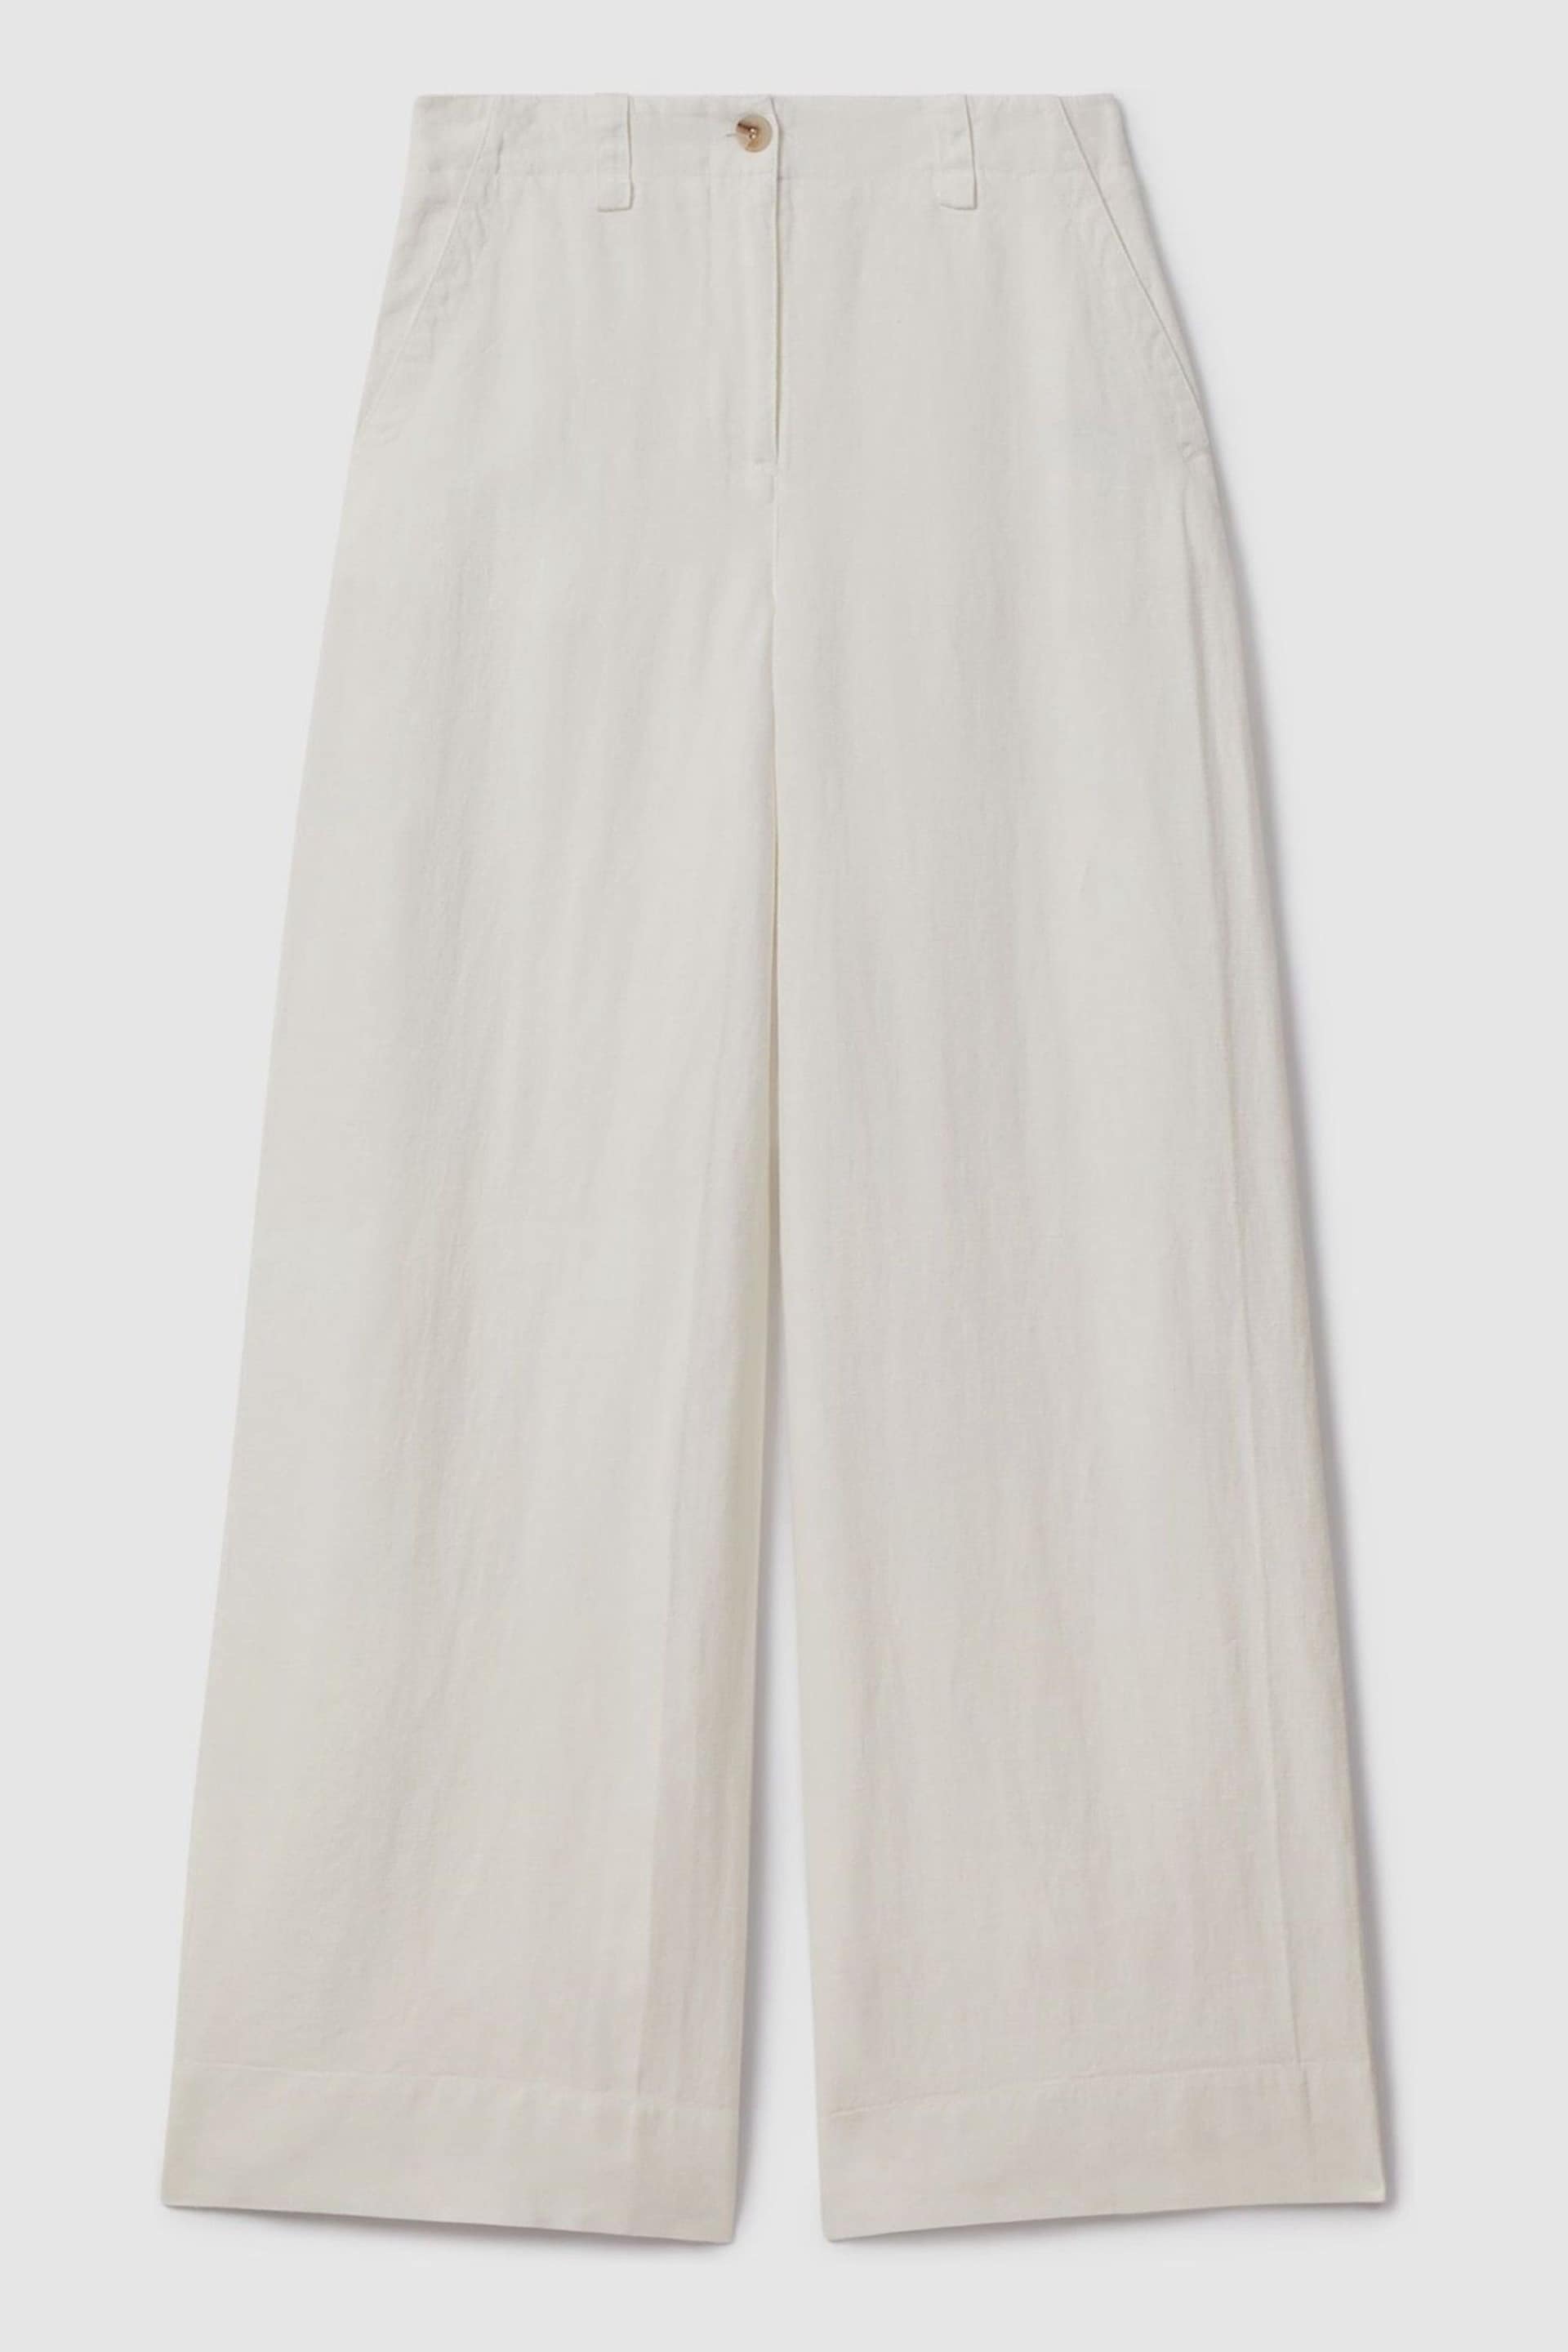 Reiss White Demi Petite Linen Wide Leg Garment Dyed Trousers - Image 2 of 6